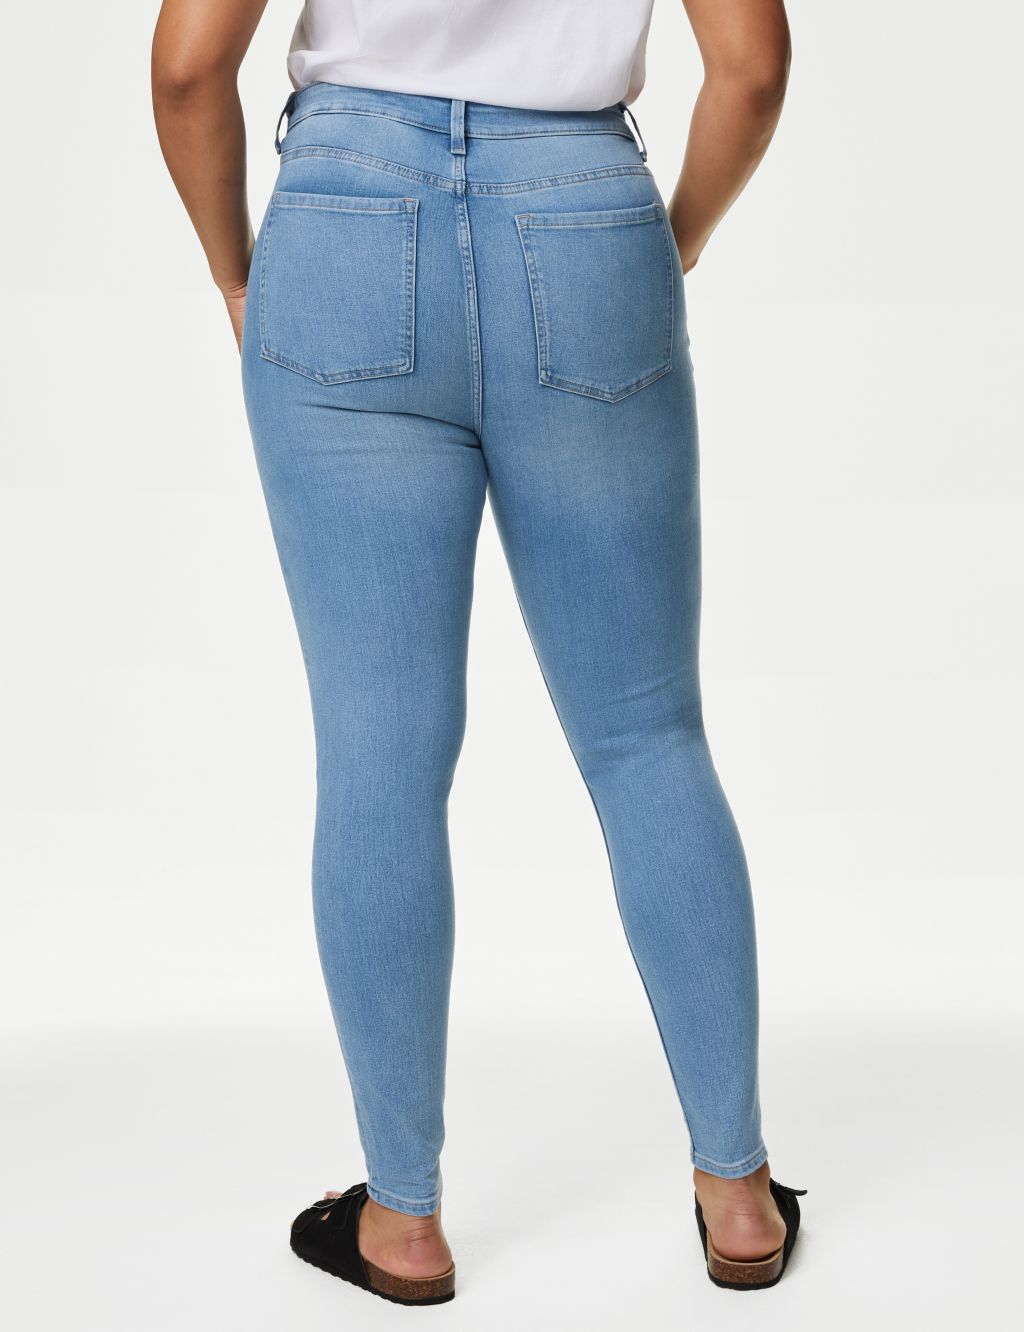 Ivy Skinny Jeans image 4